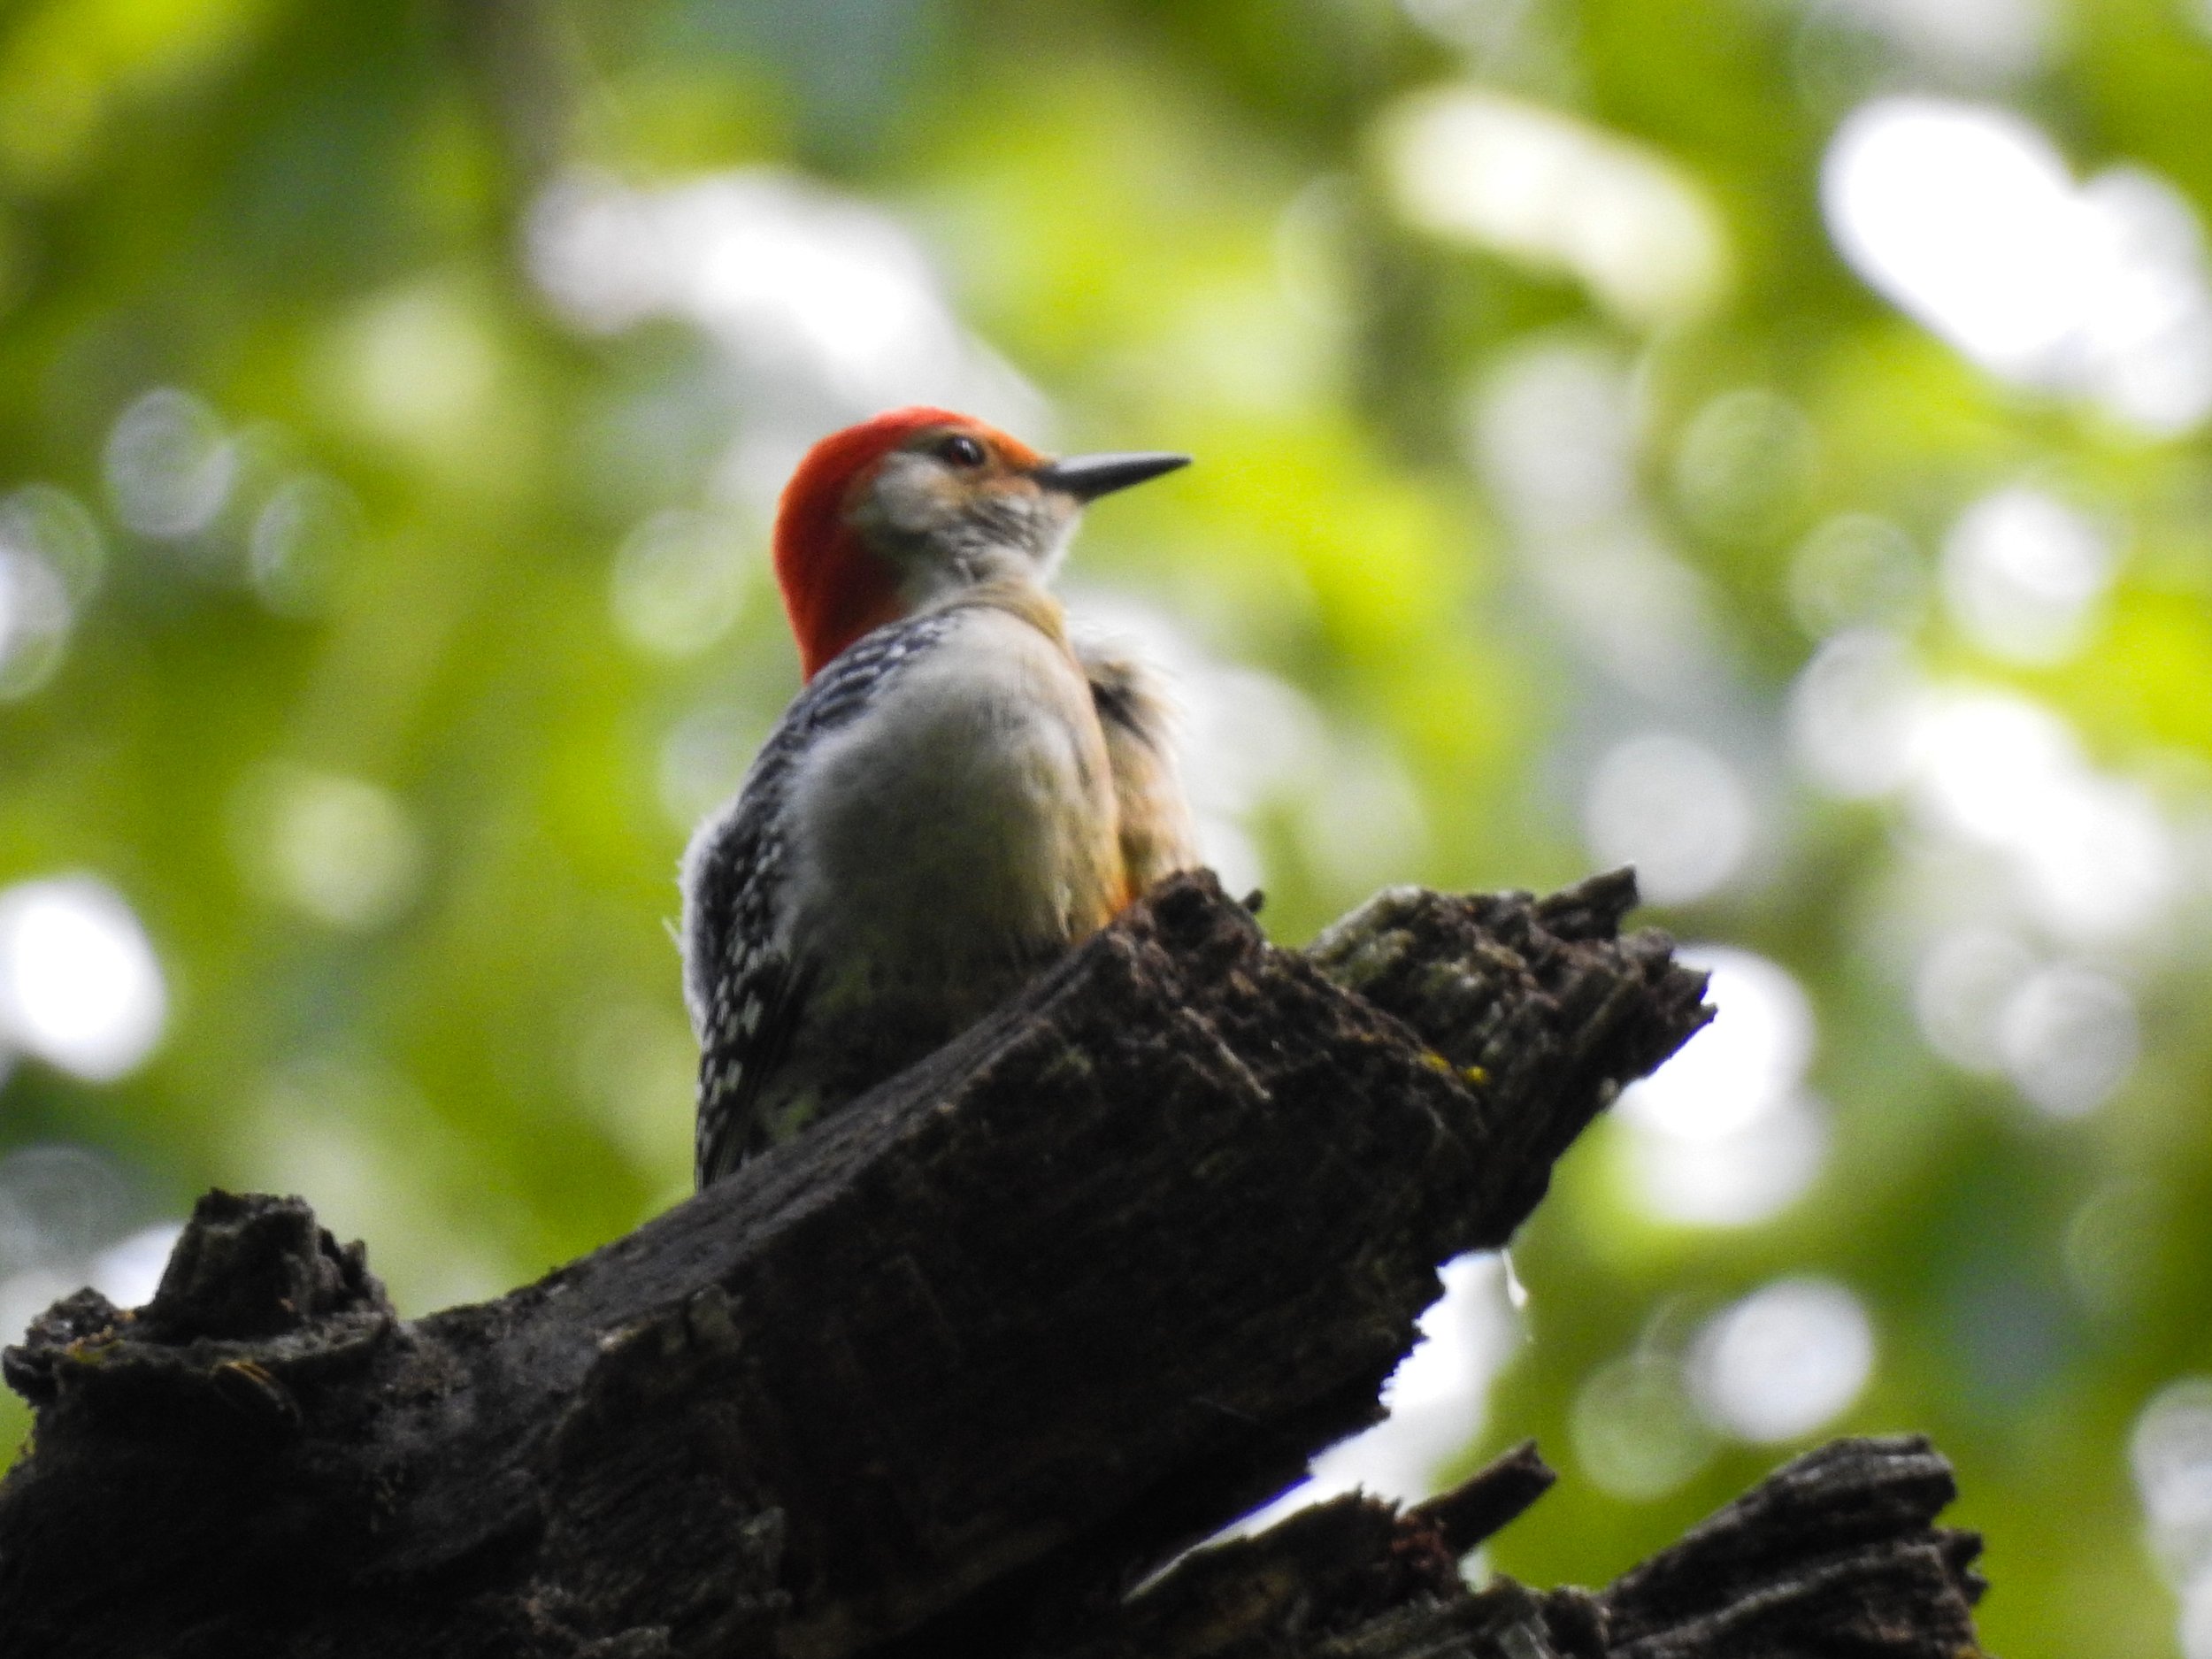  Red-bellied Woodpecker  Melanerpes carolinus  